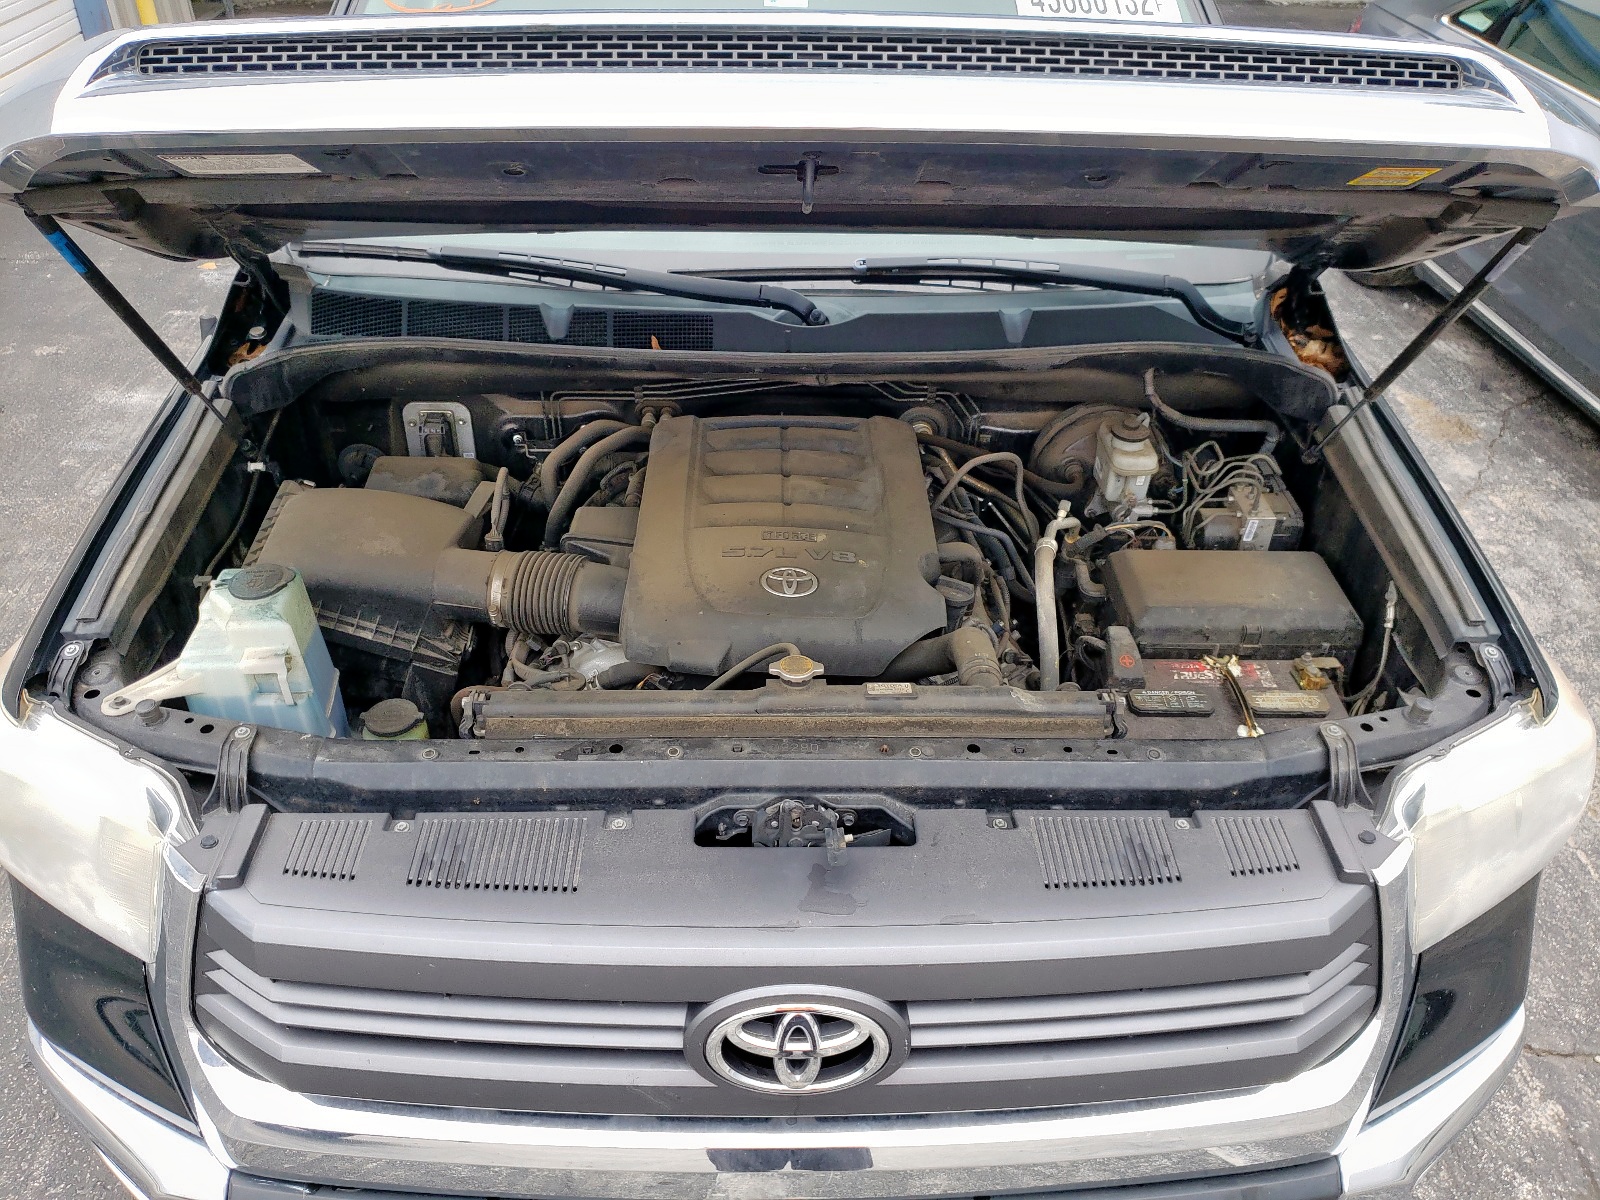 Toyota Tundra cre 2015